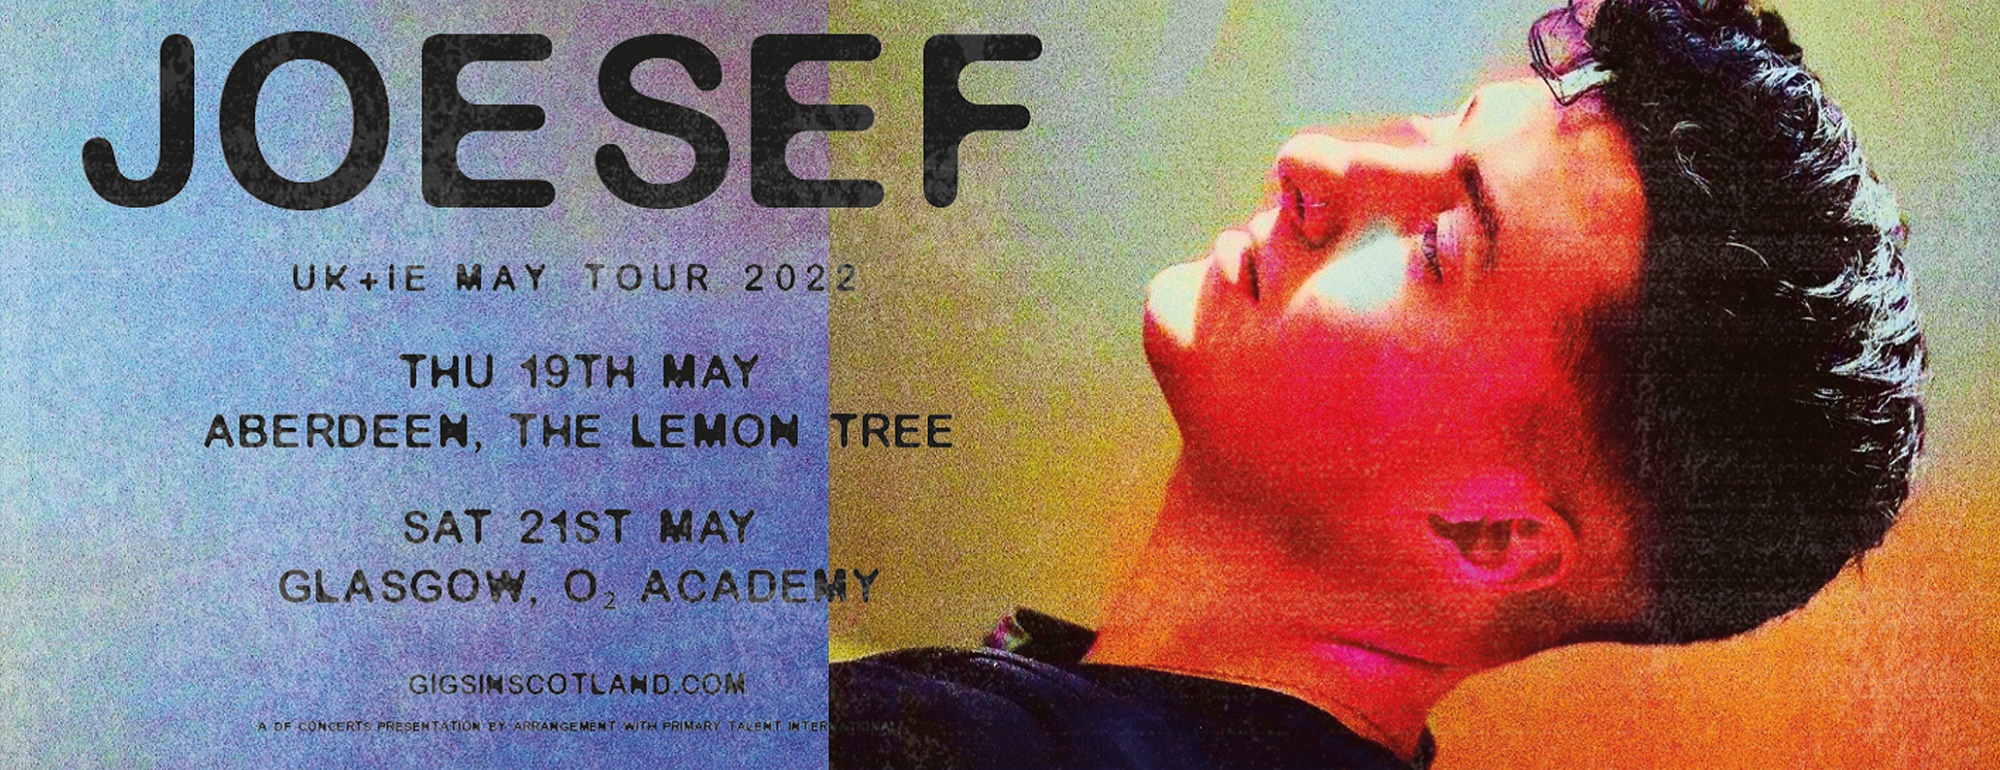 Joesef tour dates